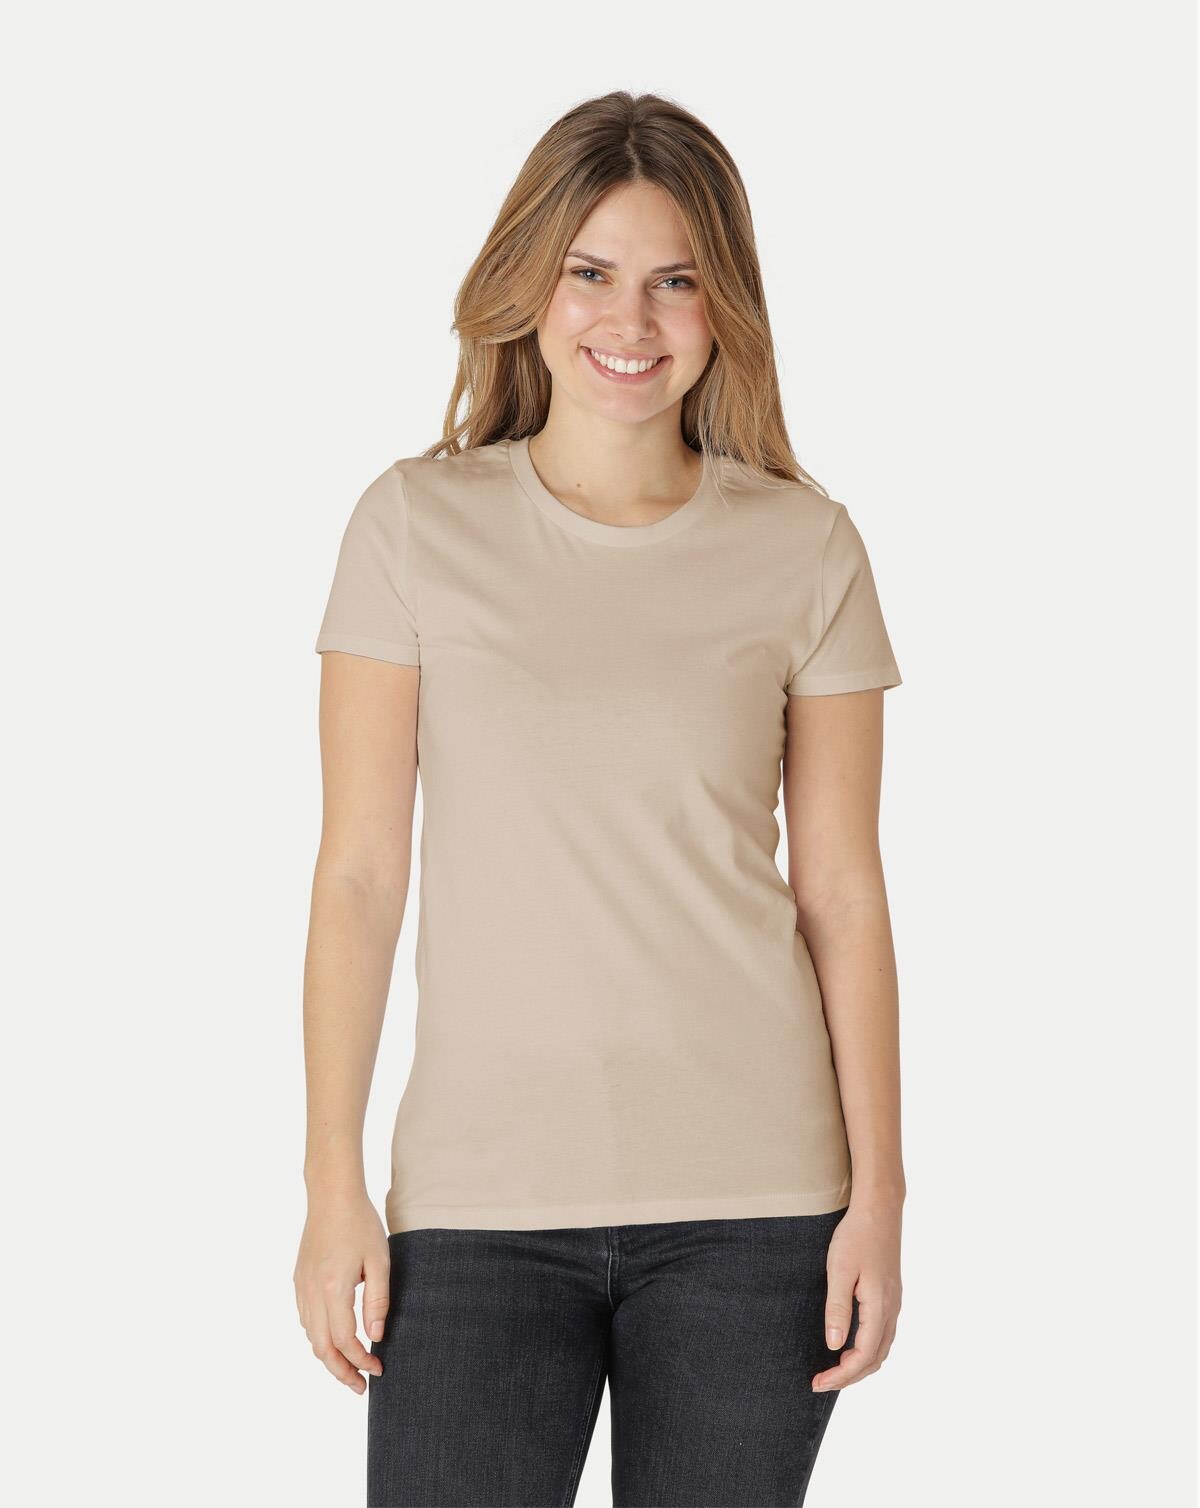 Neutral Økologisk Dame Tætsiddende T-Shirt (Sand, 2XL)